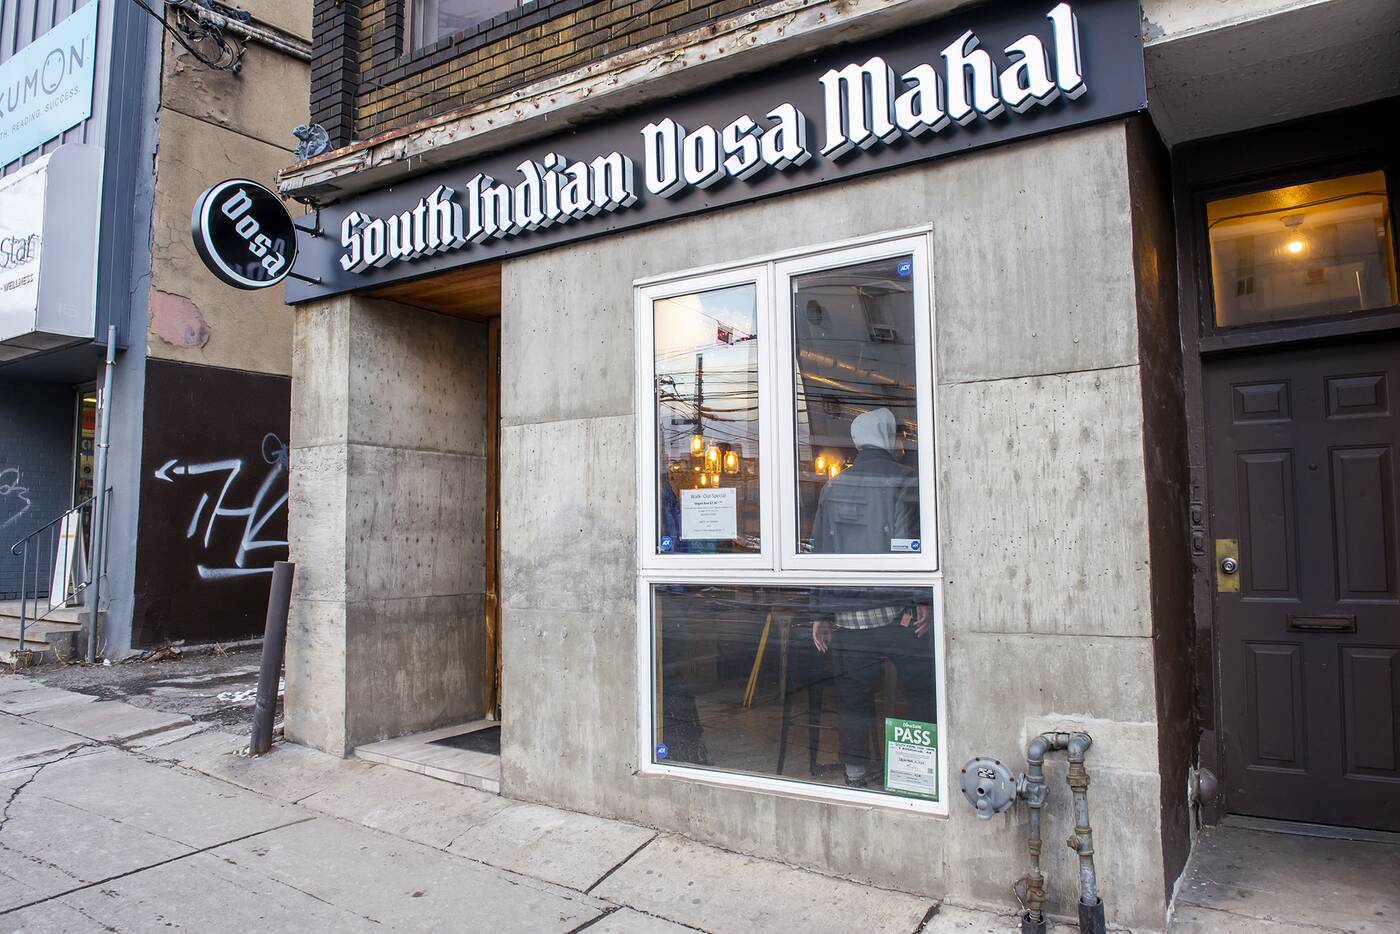 South Indian Dosa Mahal Toronto